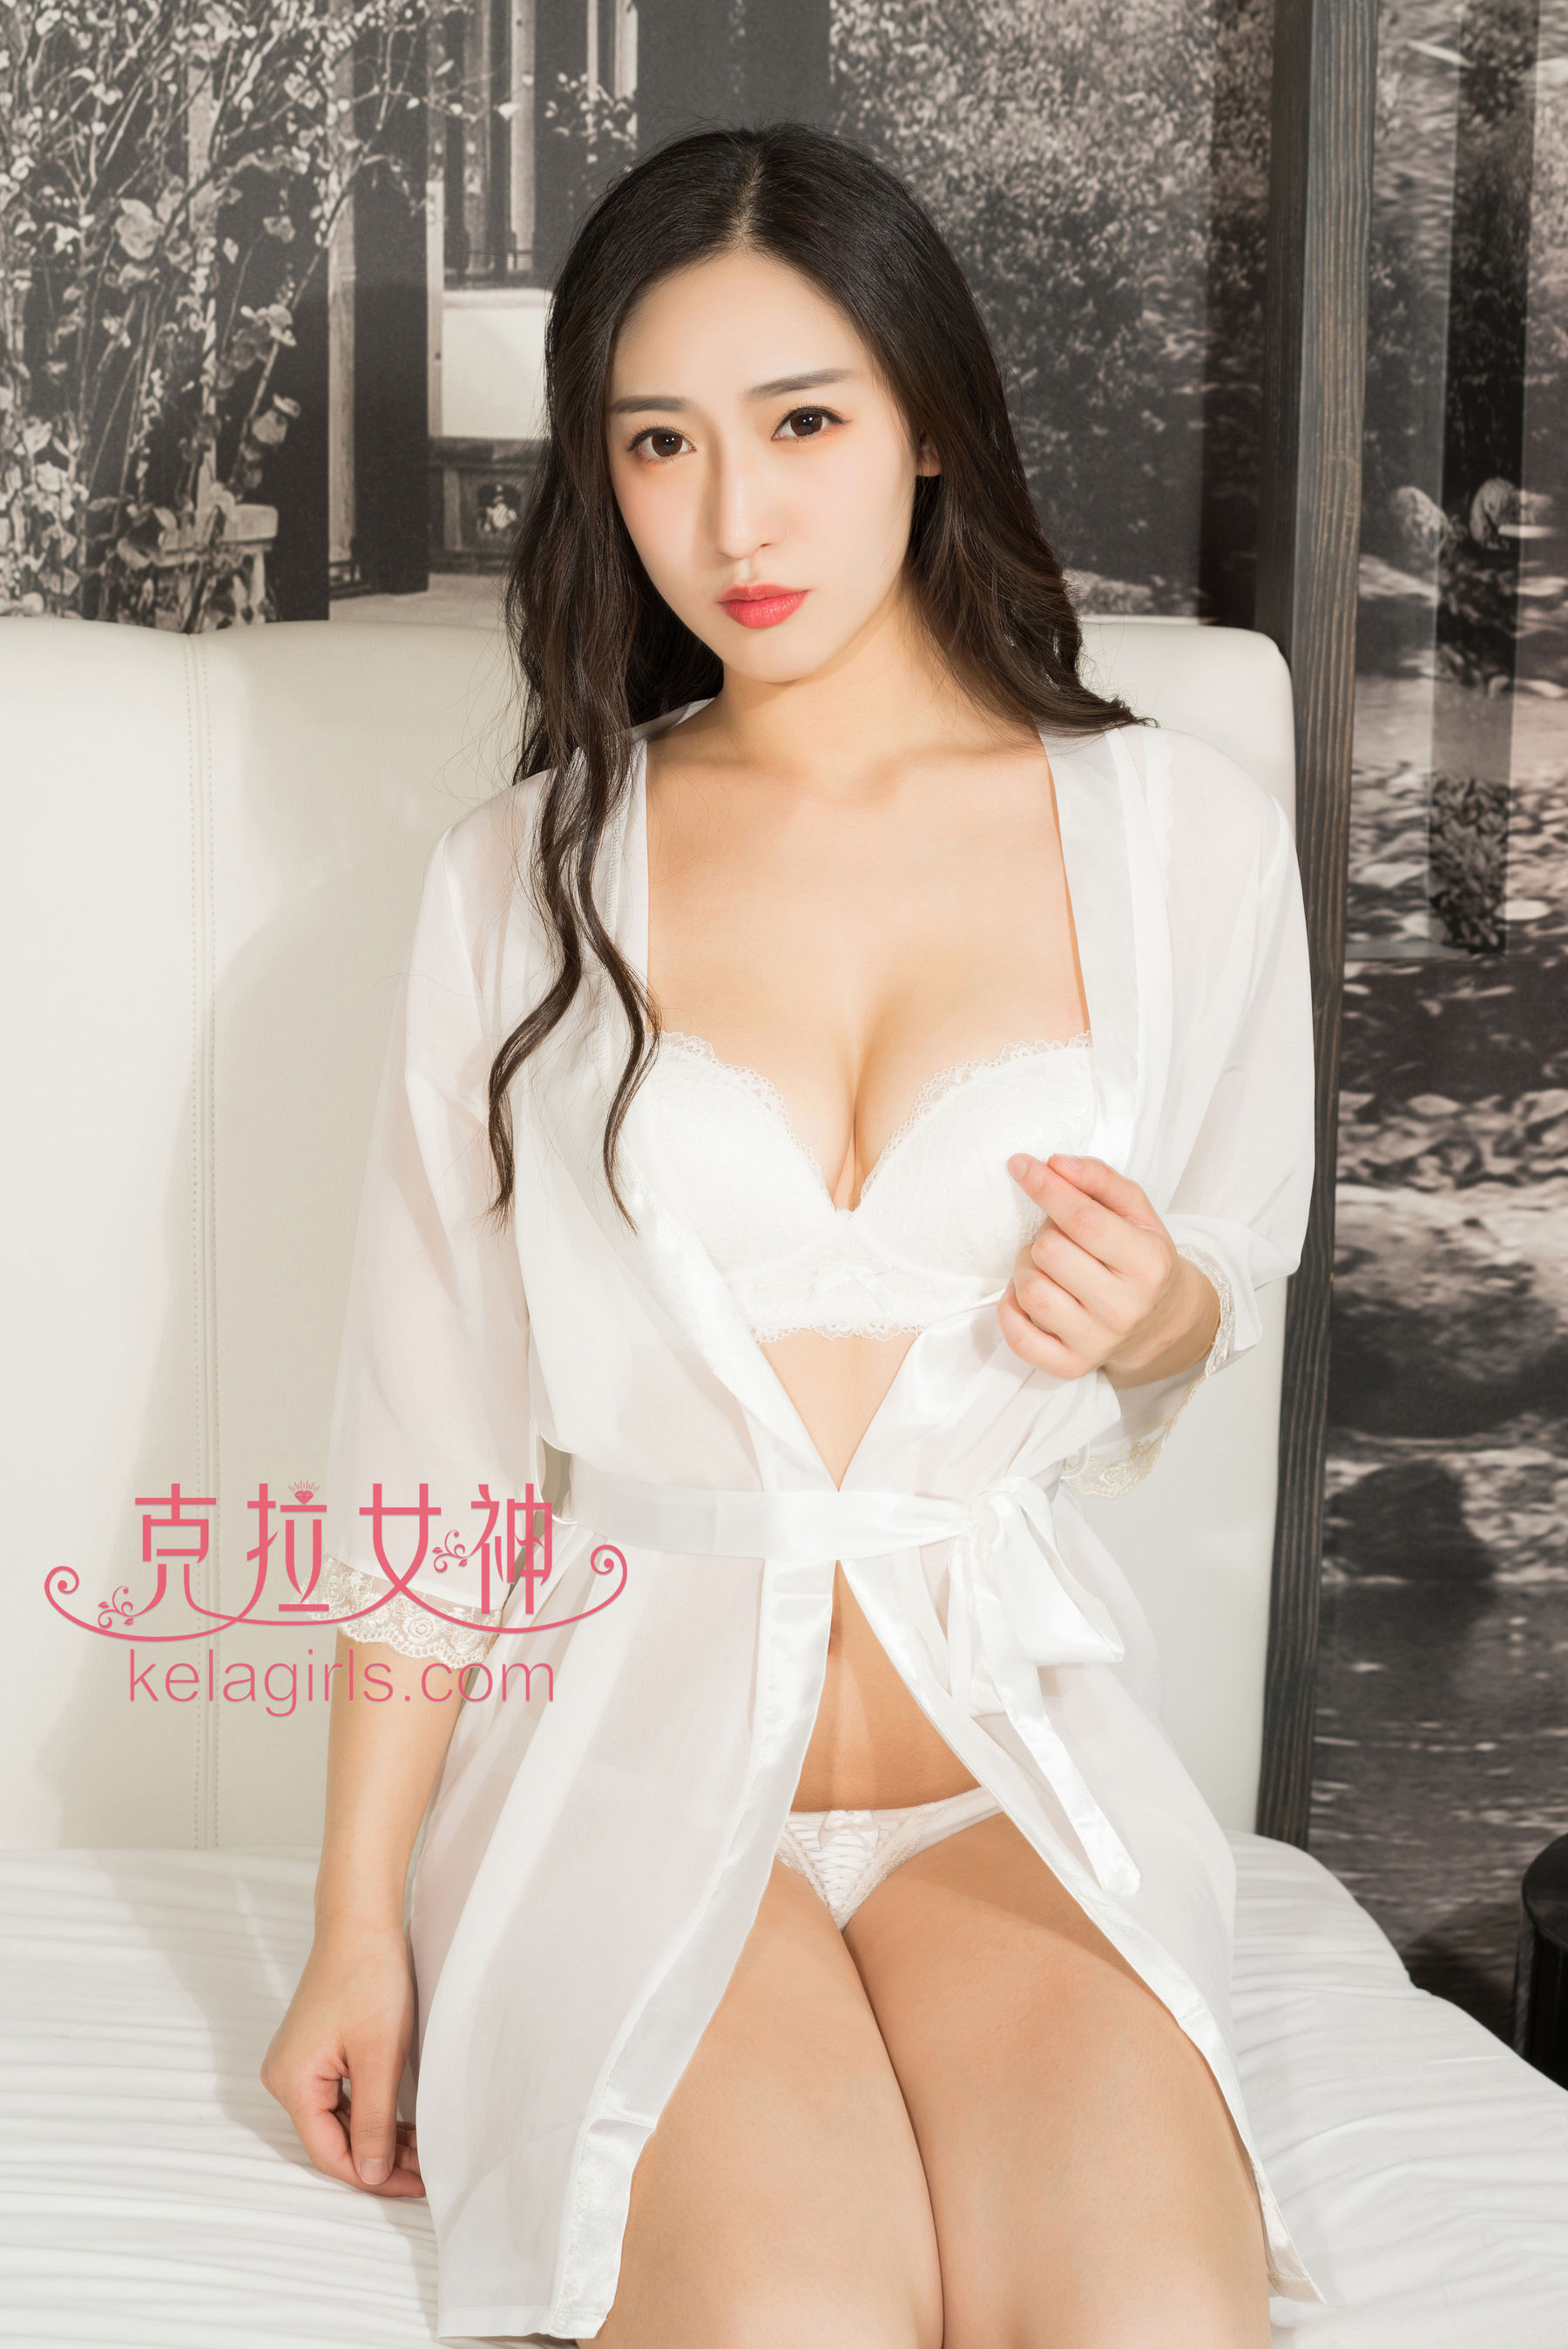 Jiang Lu’s “Mori Girl’s Boyfrings” [Crane Goddess Kelagirls] photo album